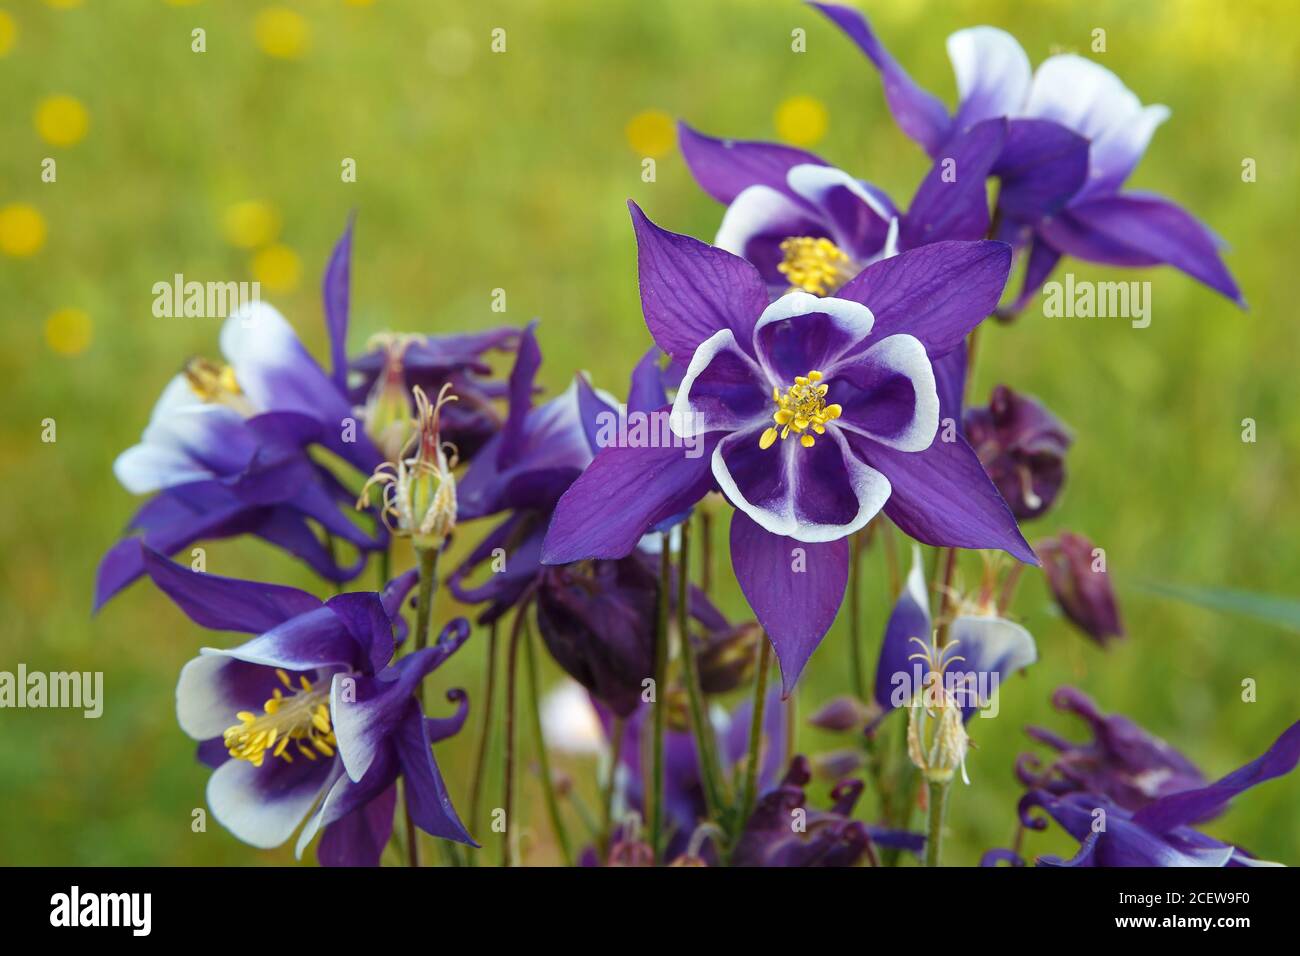 Purple columbine flower on a background of green vegetation. Stock Photo